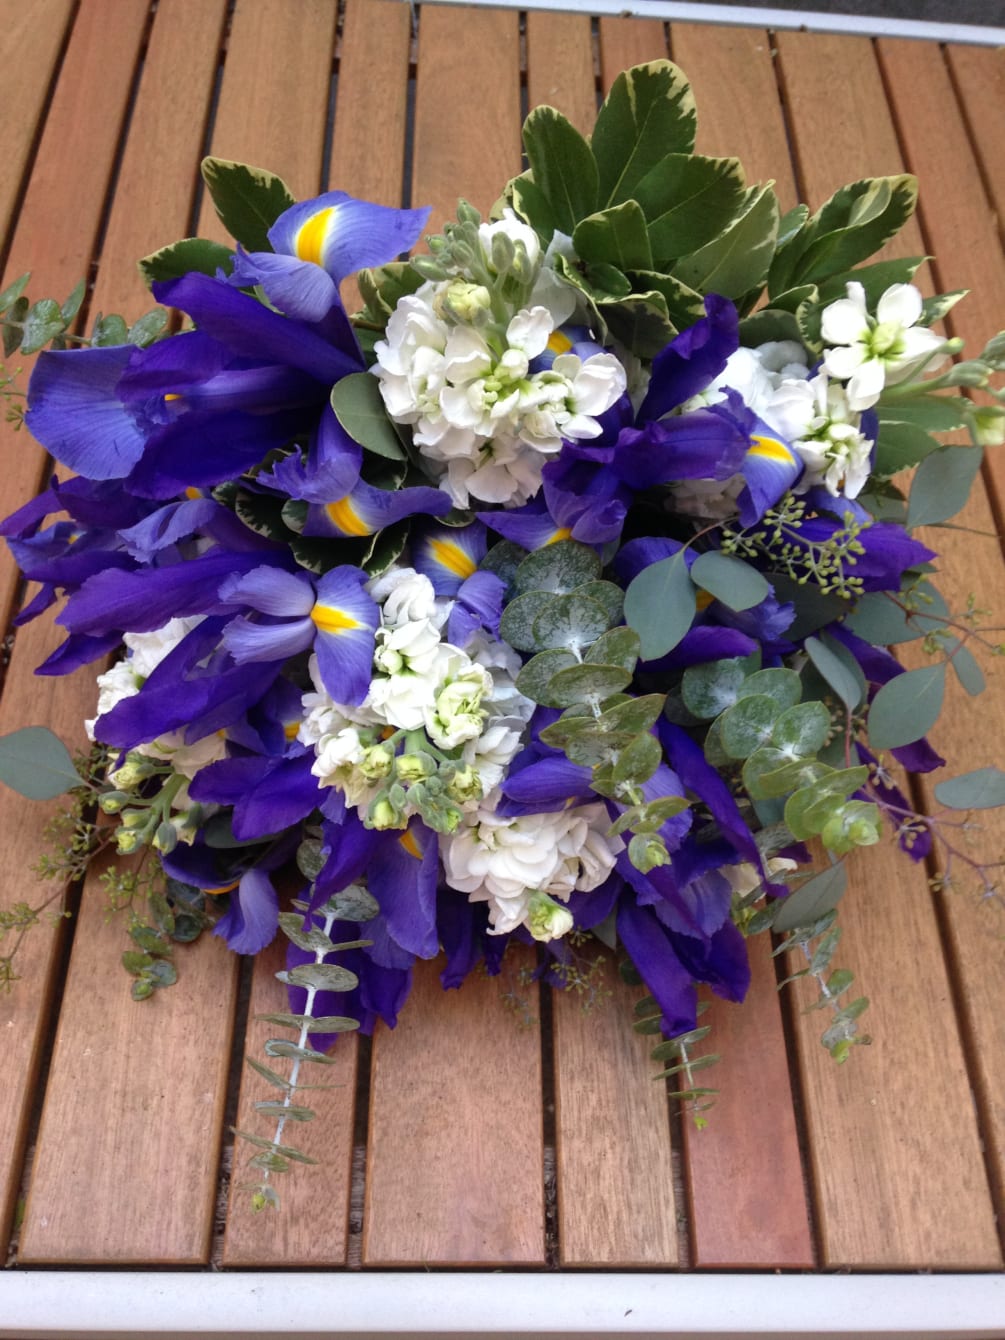 A burst of blue irises, white stock, and seasonal greenery - something